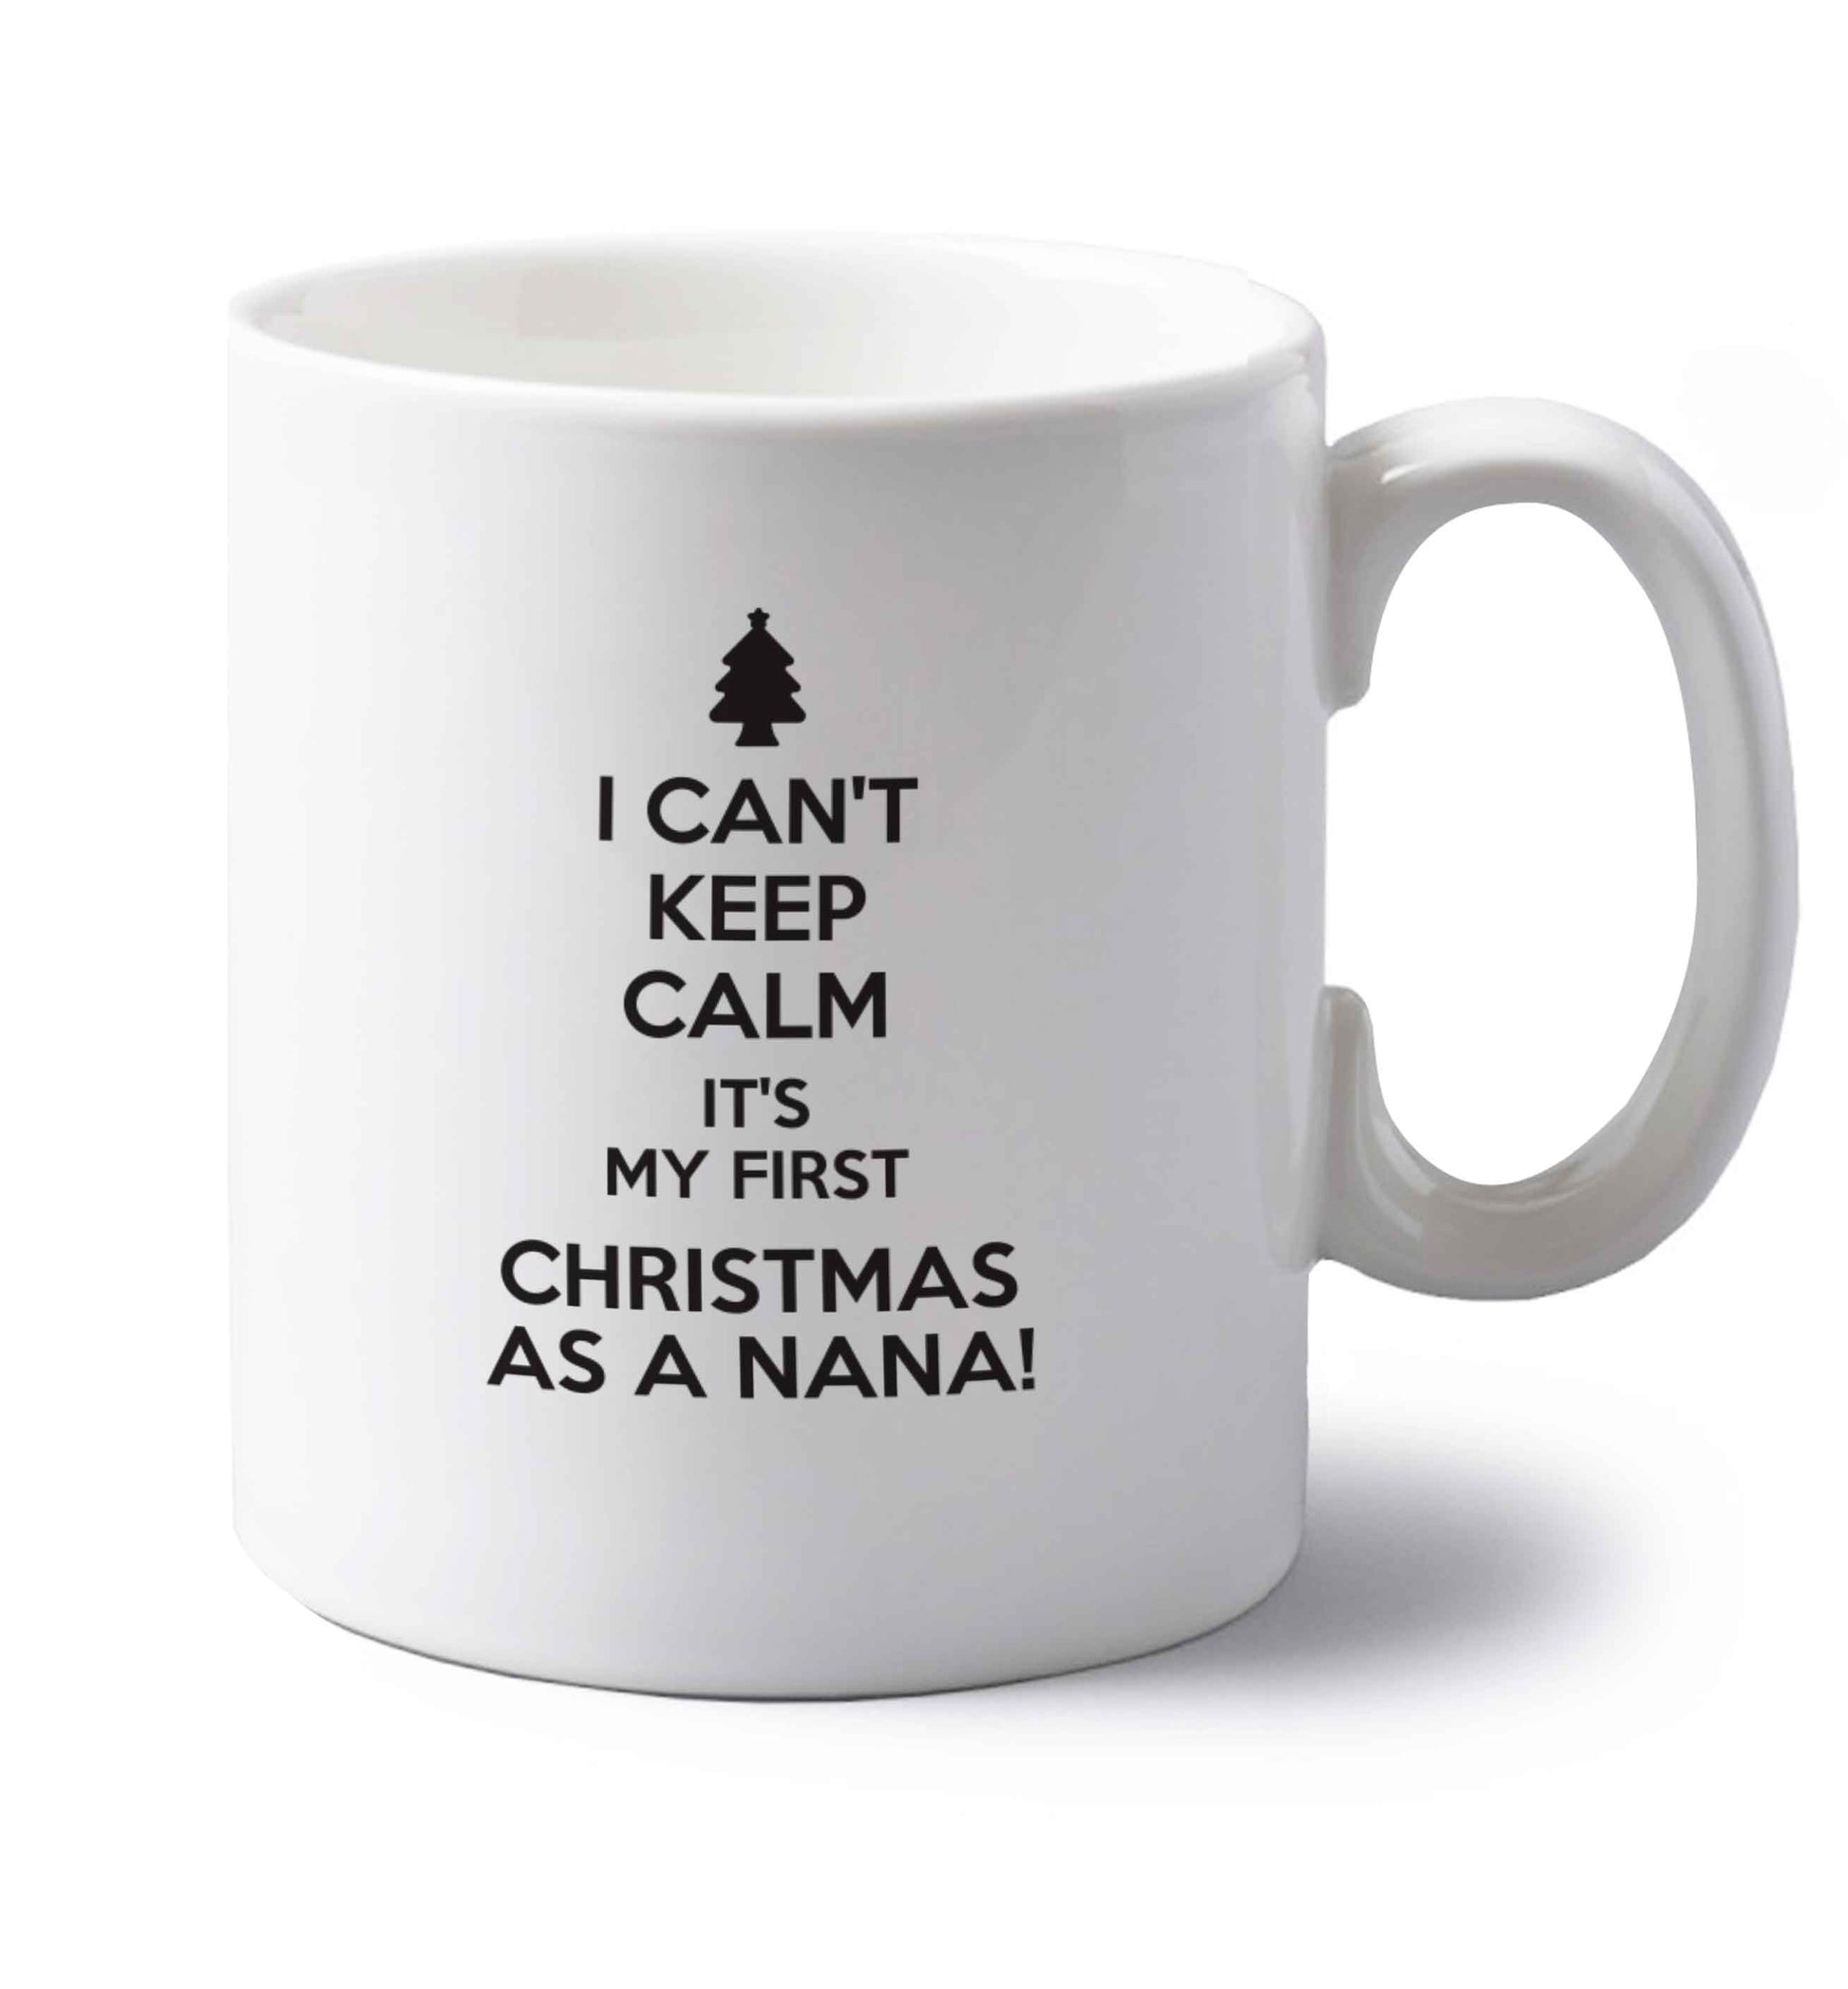 I can't keep calm it's my first Christmas as a nana! left handed white ceramic mug 